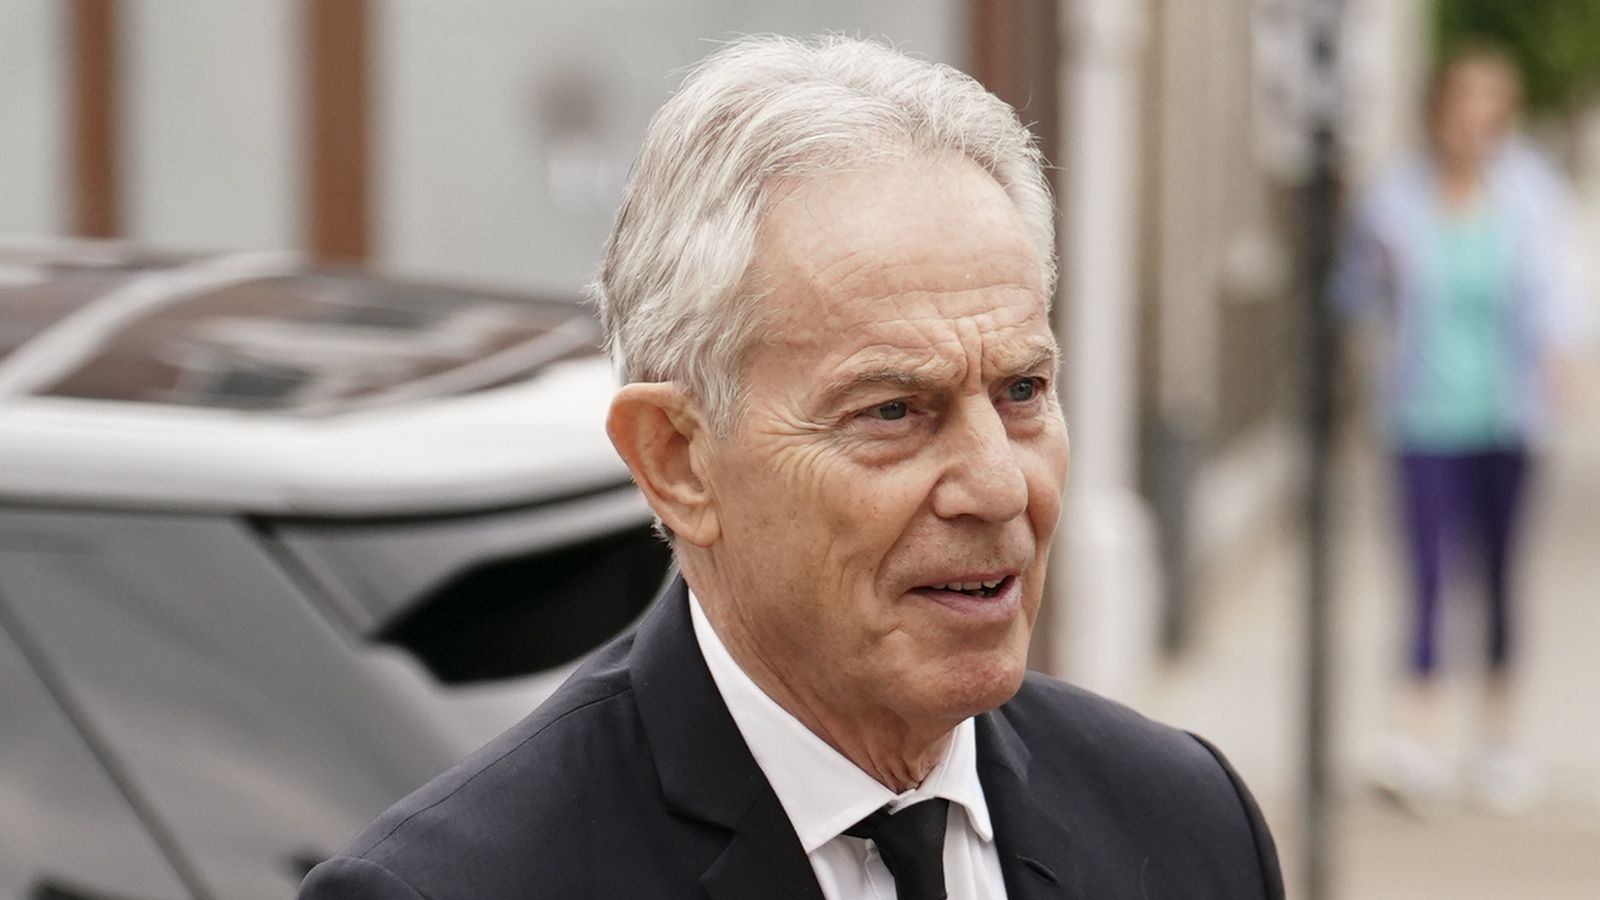 Sir Tony Blair's institute continued to receive Saudi Arabian money after murder of Jamal Khashoggi